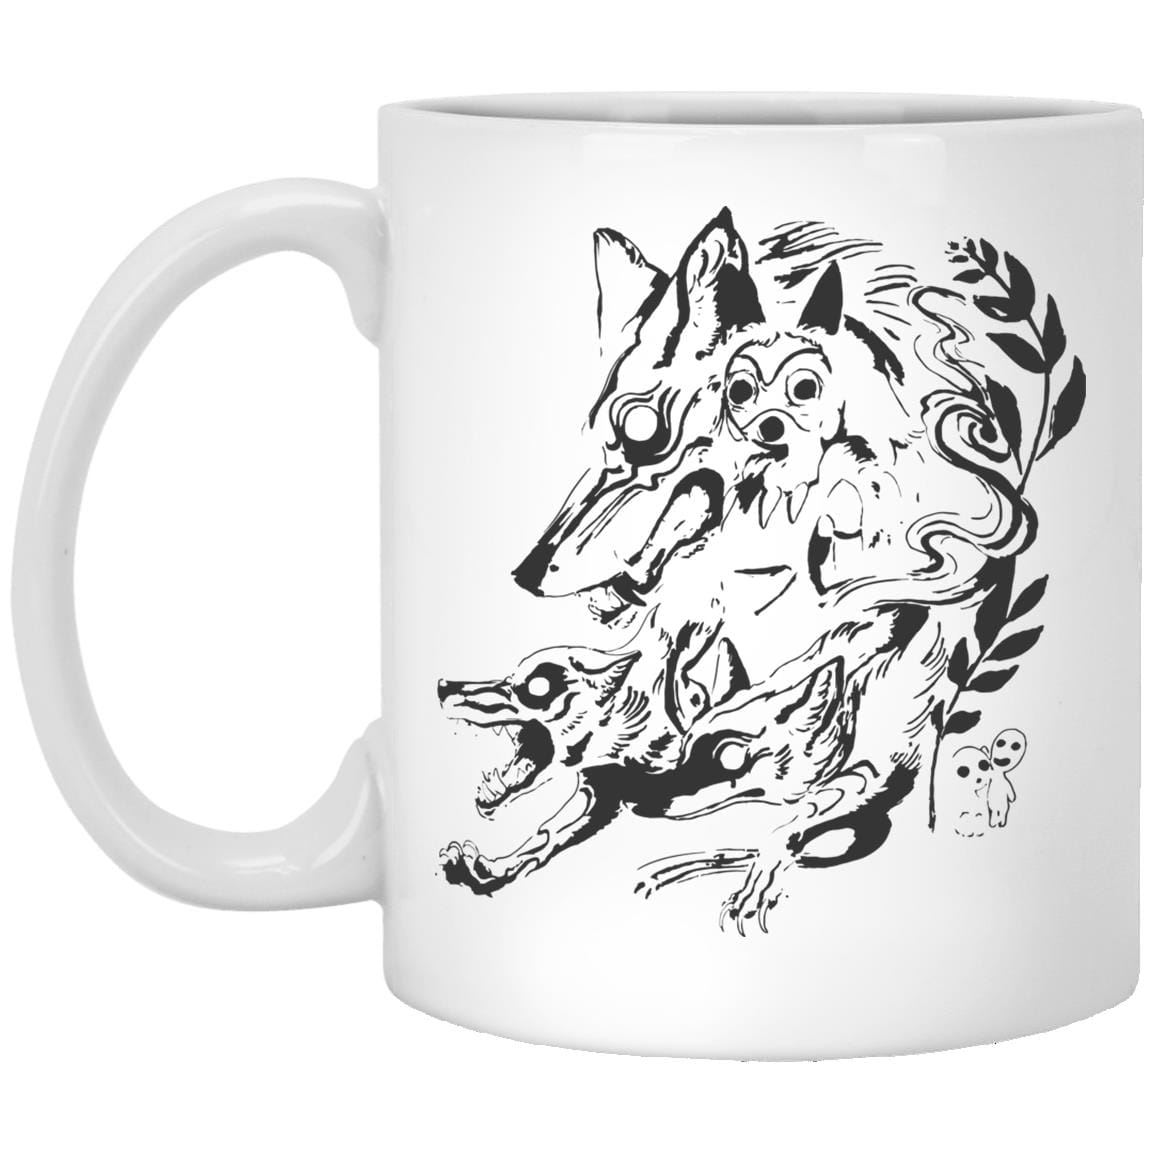 Princess Mononoke and The Wolf Creative Art Mug